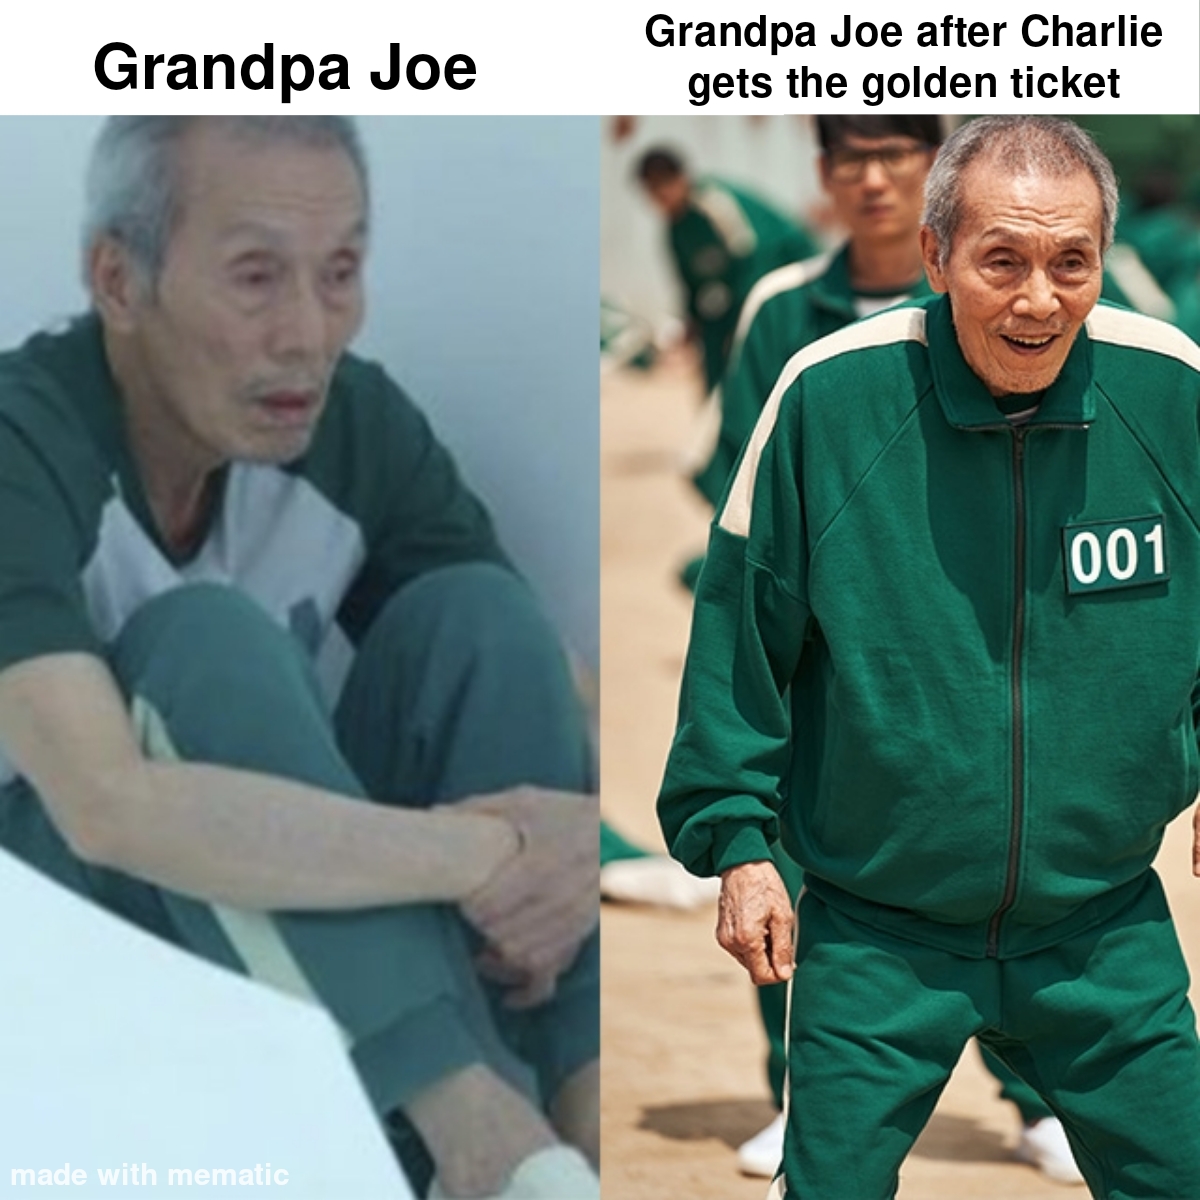 dank memes - funny memes - squid game old man - Grandpa Joe Grandpa Joe after Charlie gets the golden ticket 001